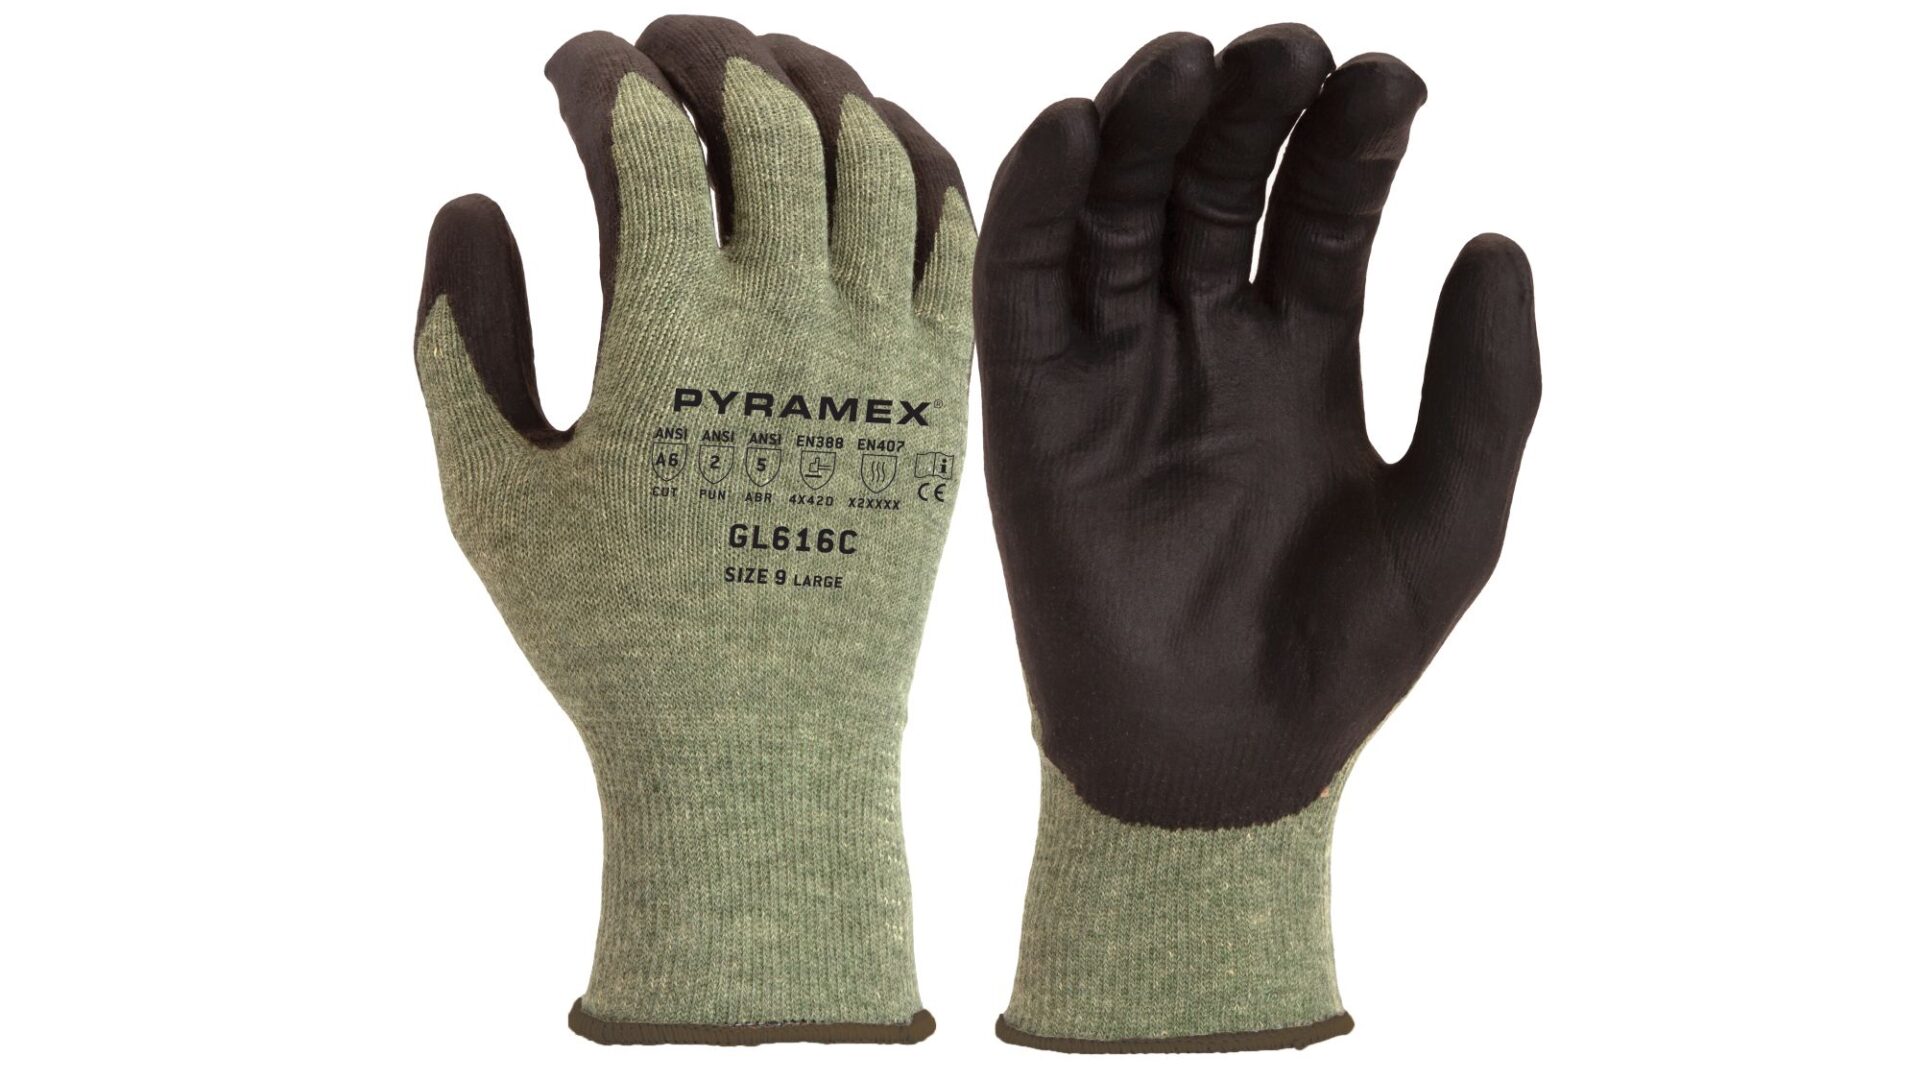 A Cream and Black Gloves Pair Set